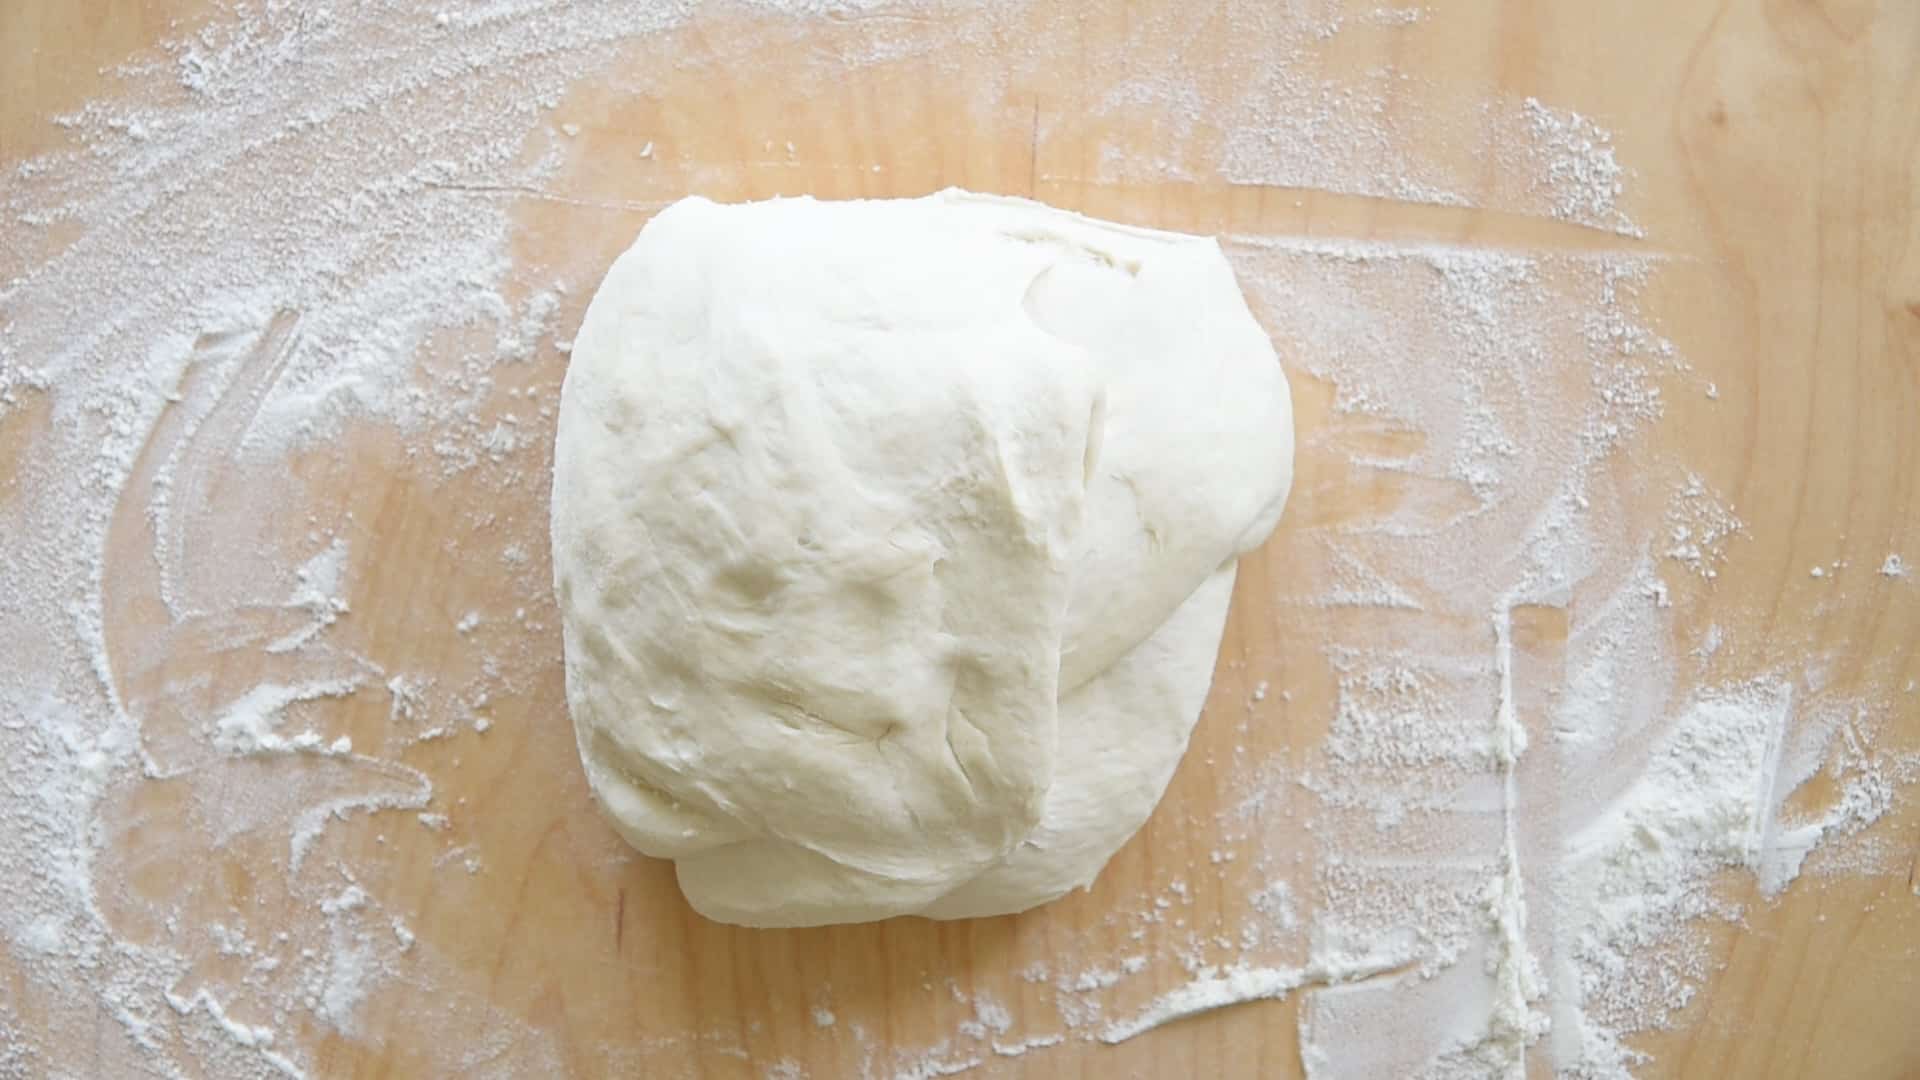 Let the dough rest for 20 minutes